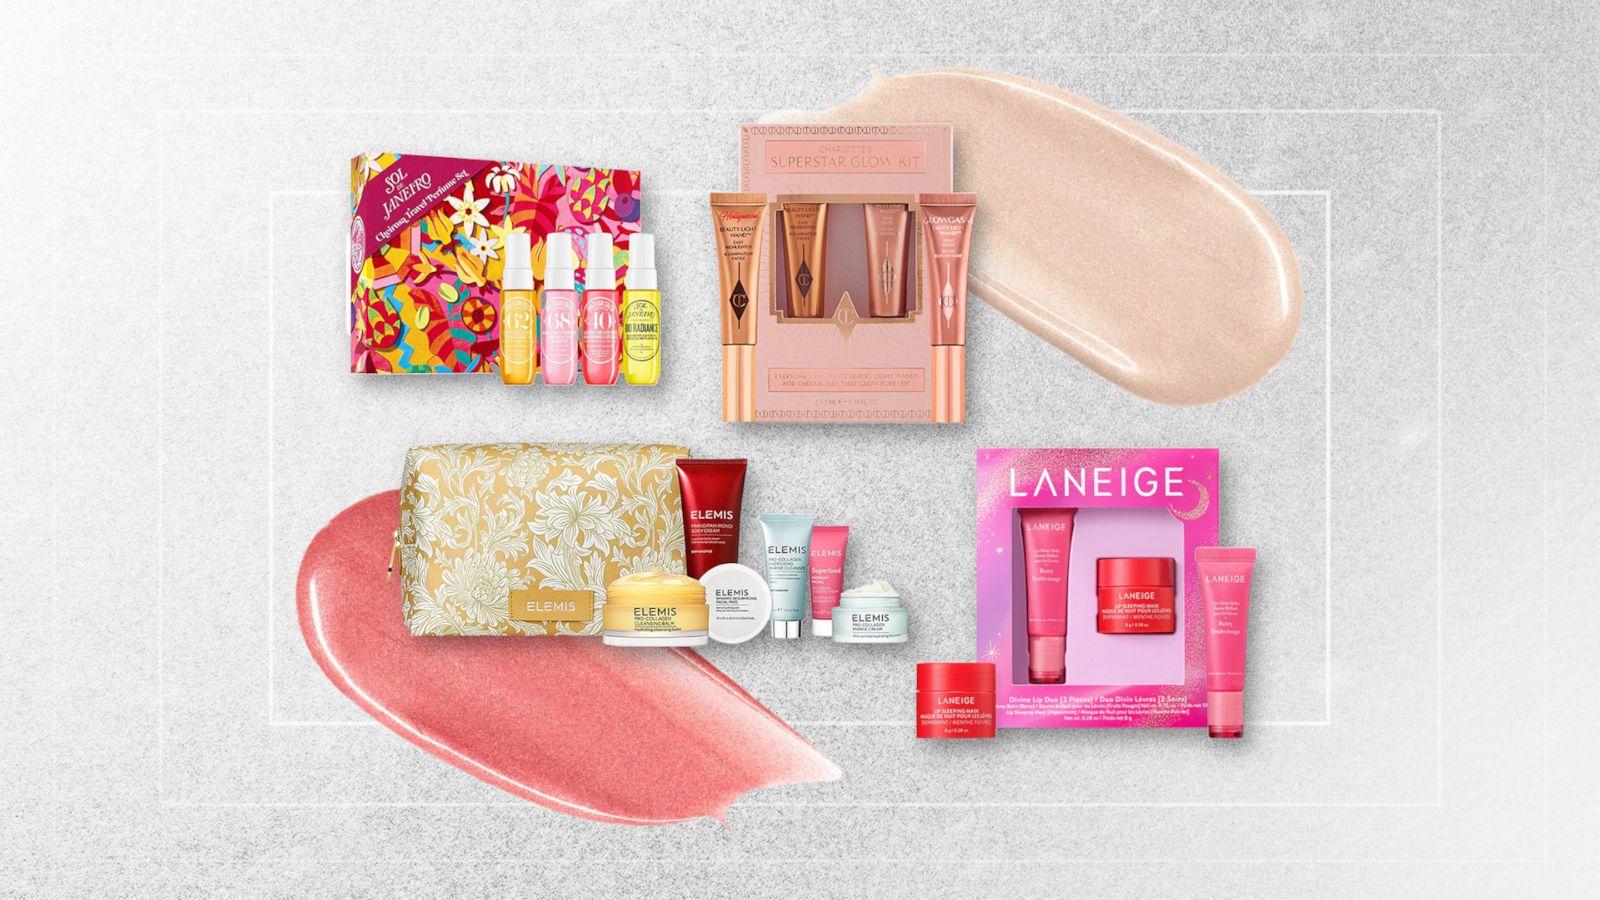 Victoria's Secret PINK - Ready? Set ⏱ Shop! The PINK Sale starts